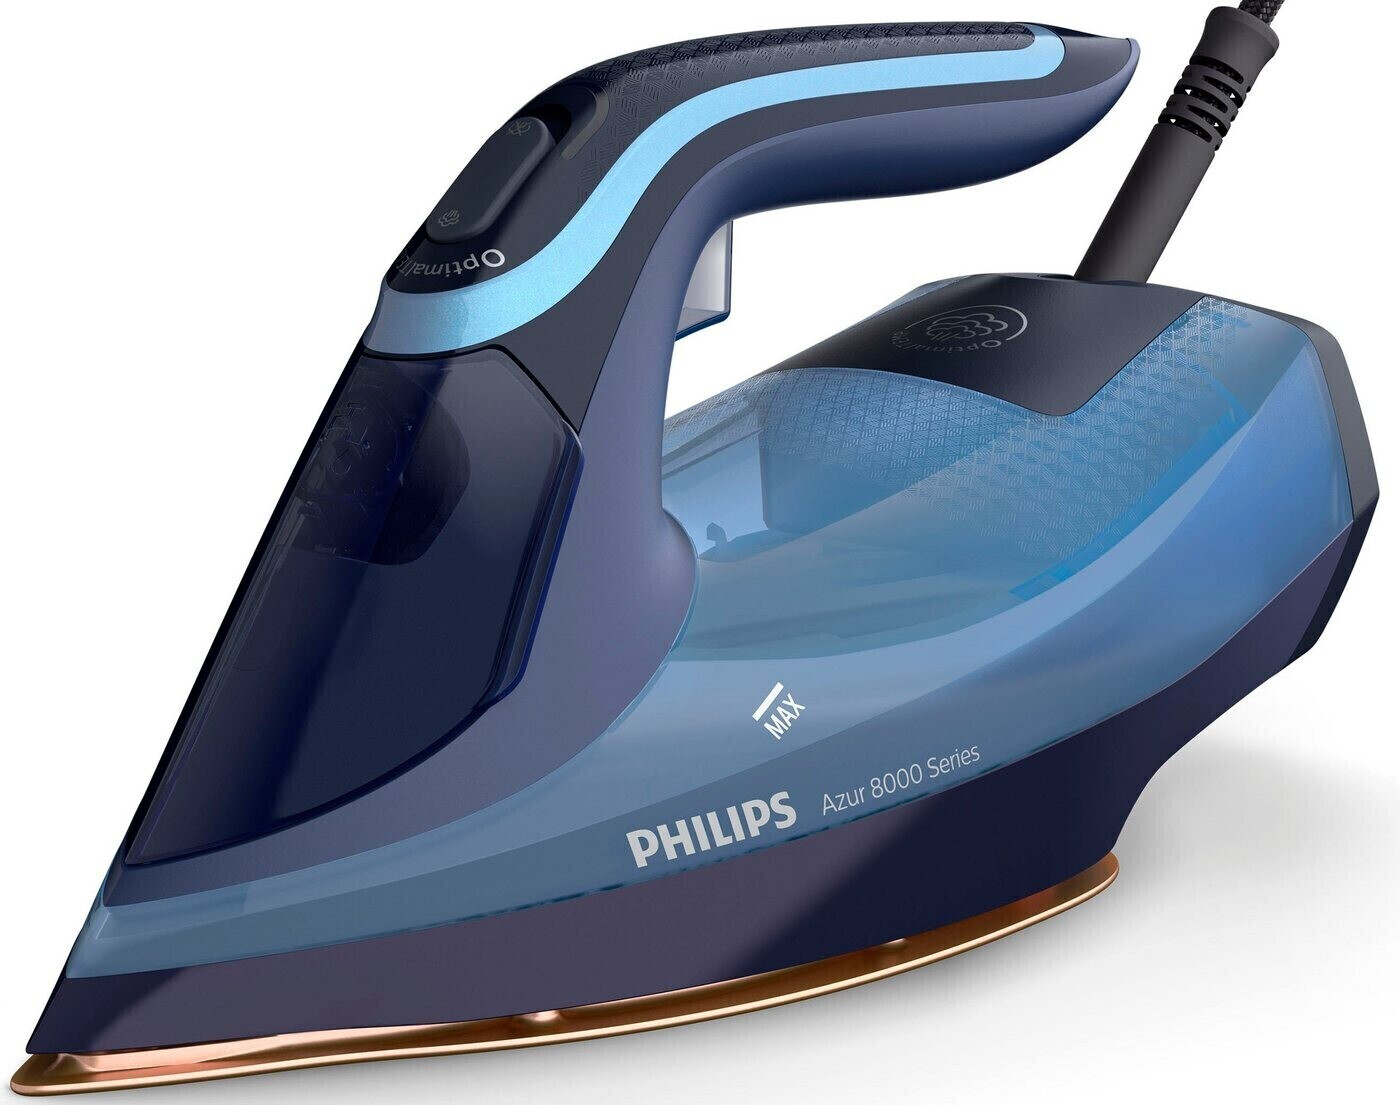 Philips DST8020/20 a € 79,99 (oggi)